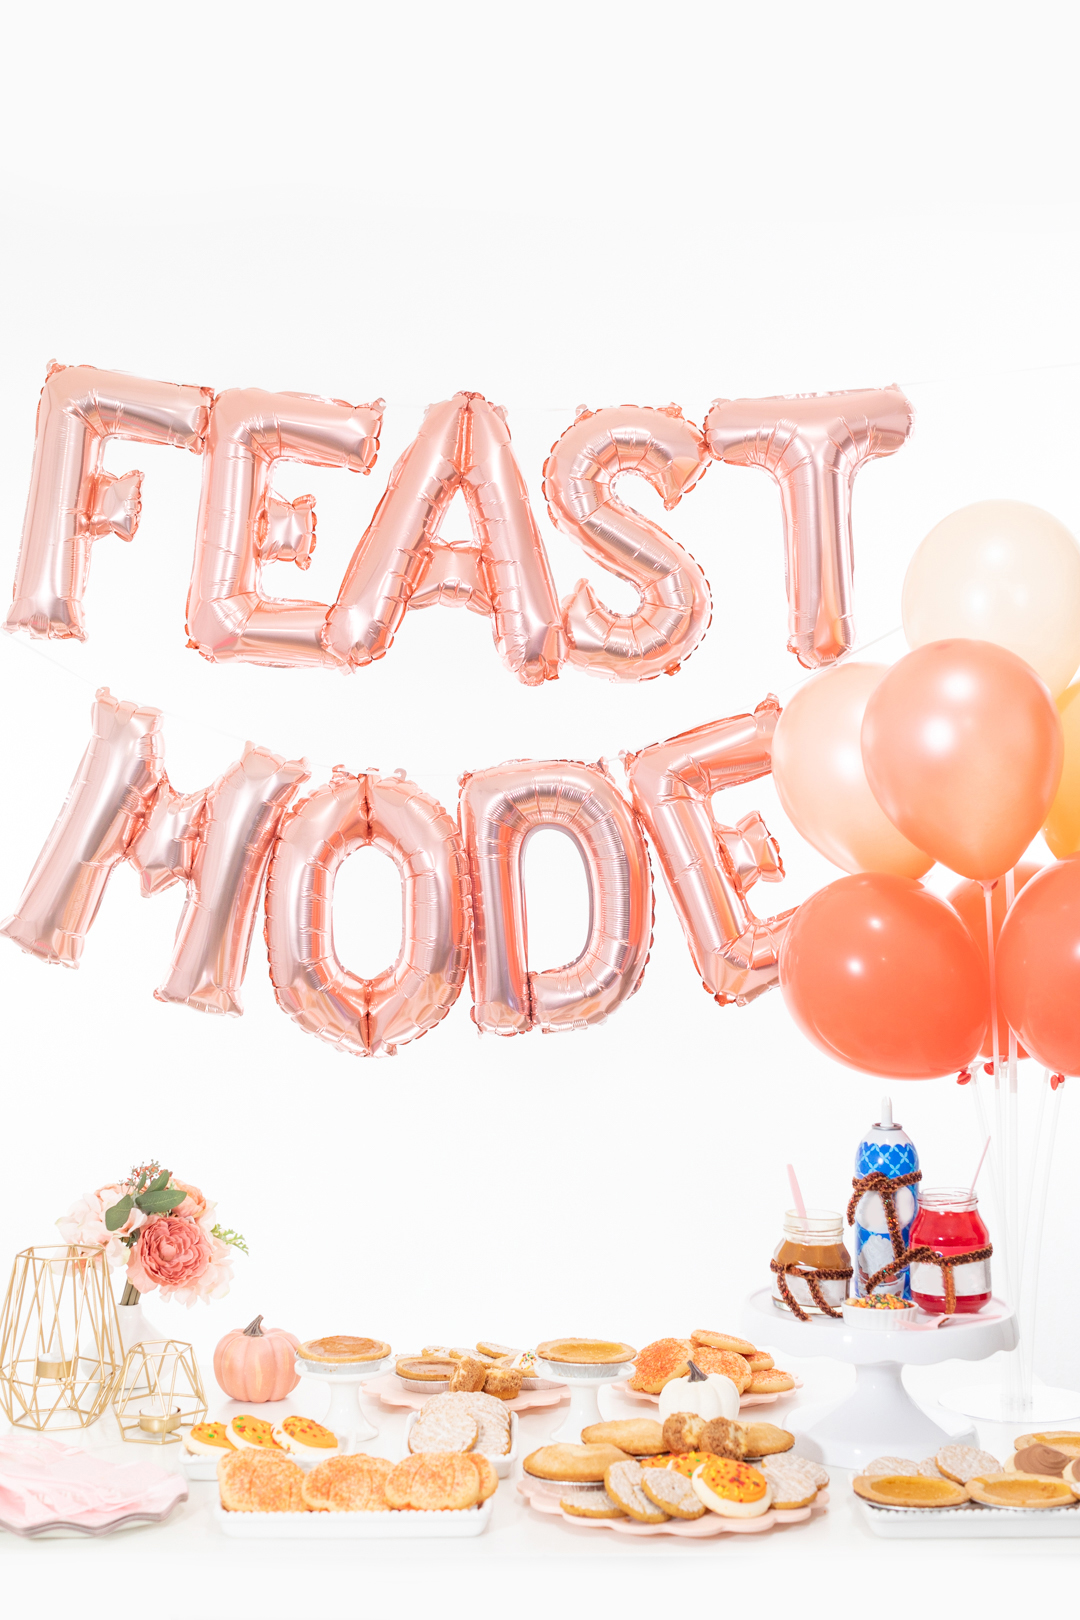 feast mood letter balloons